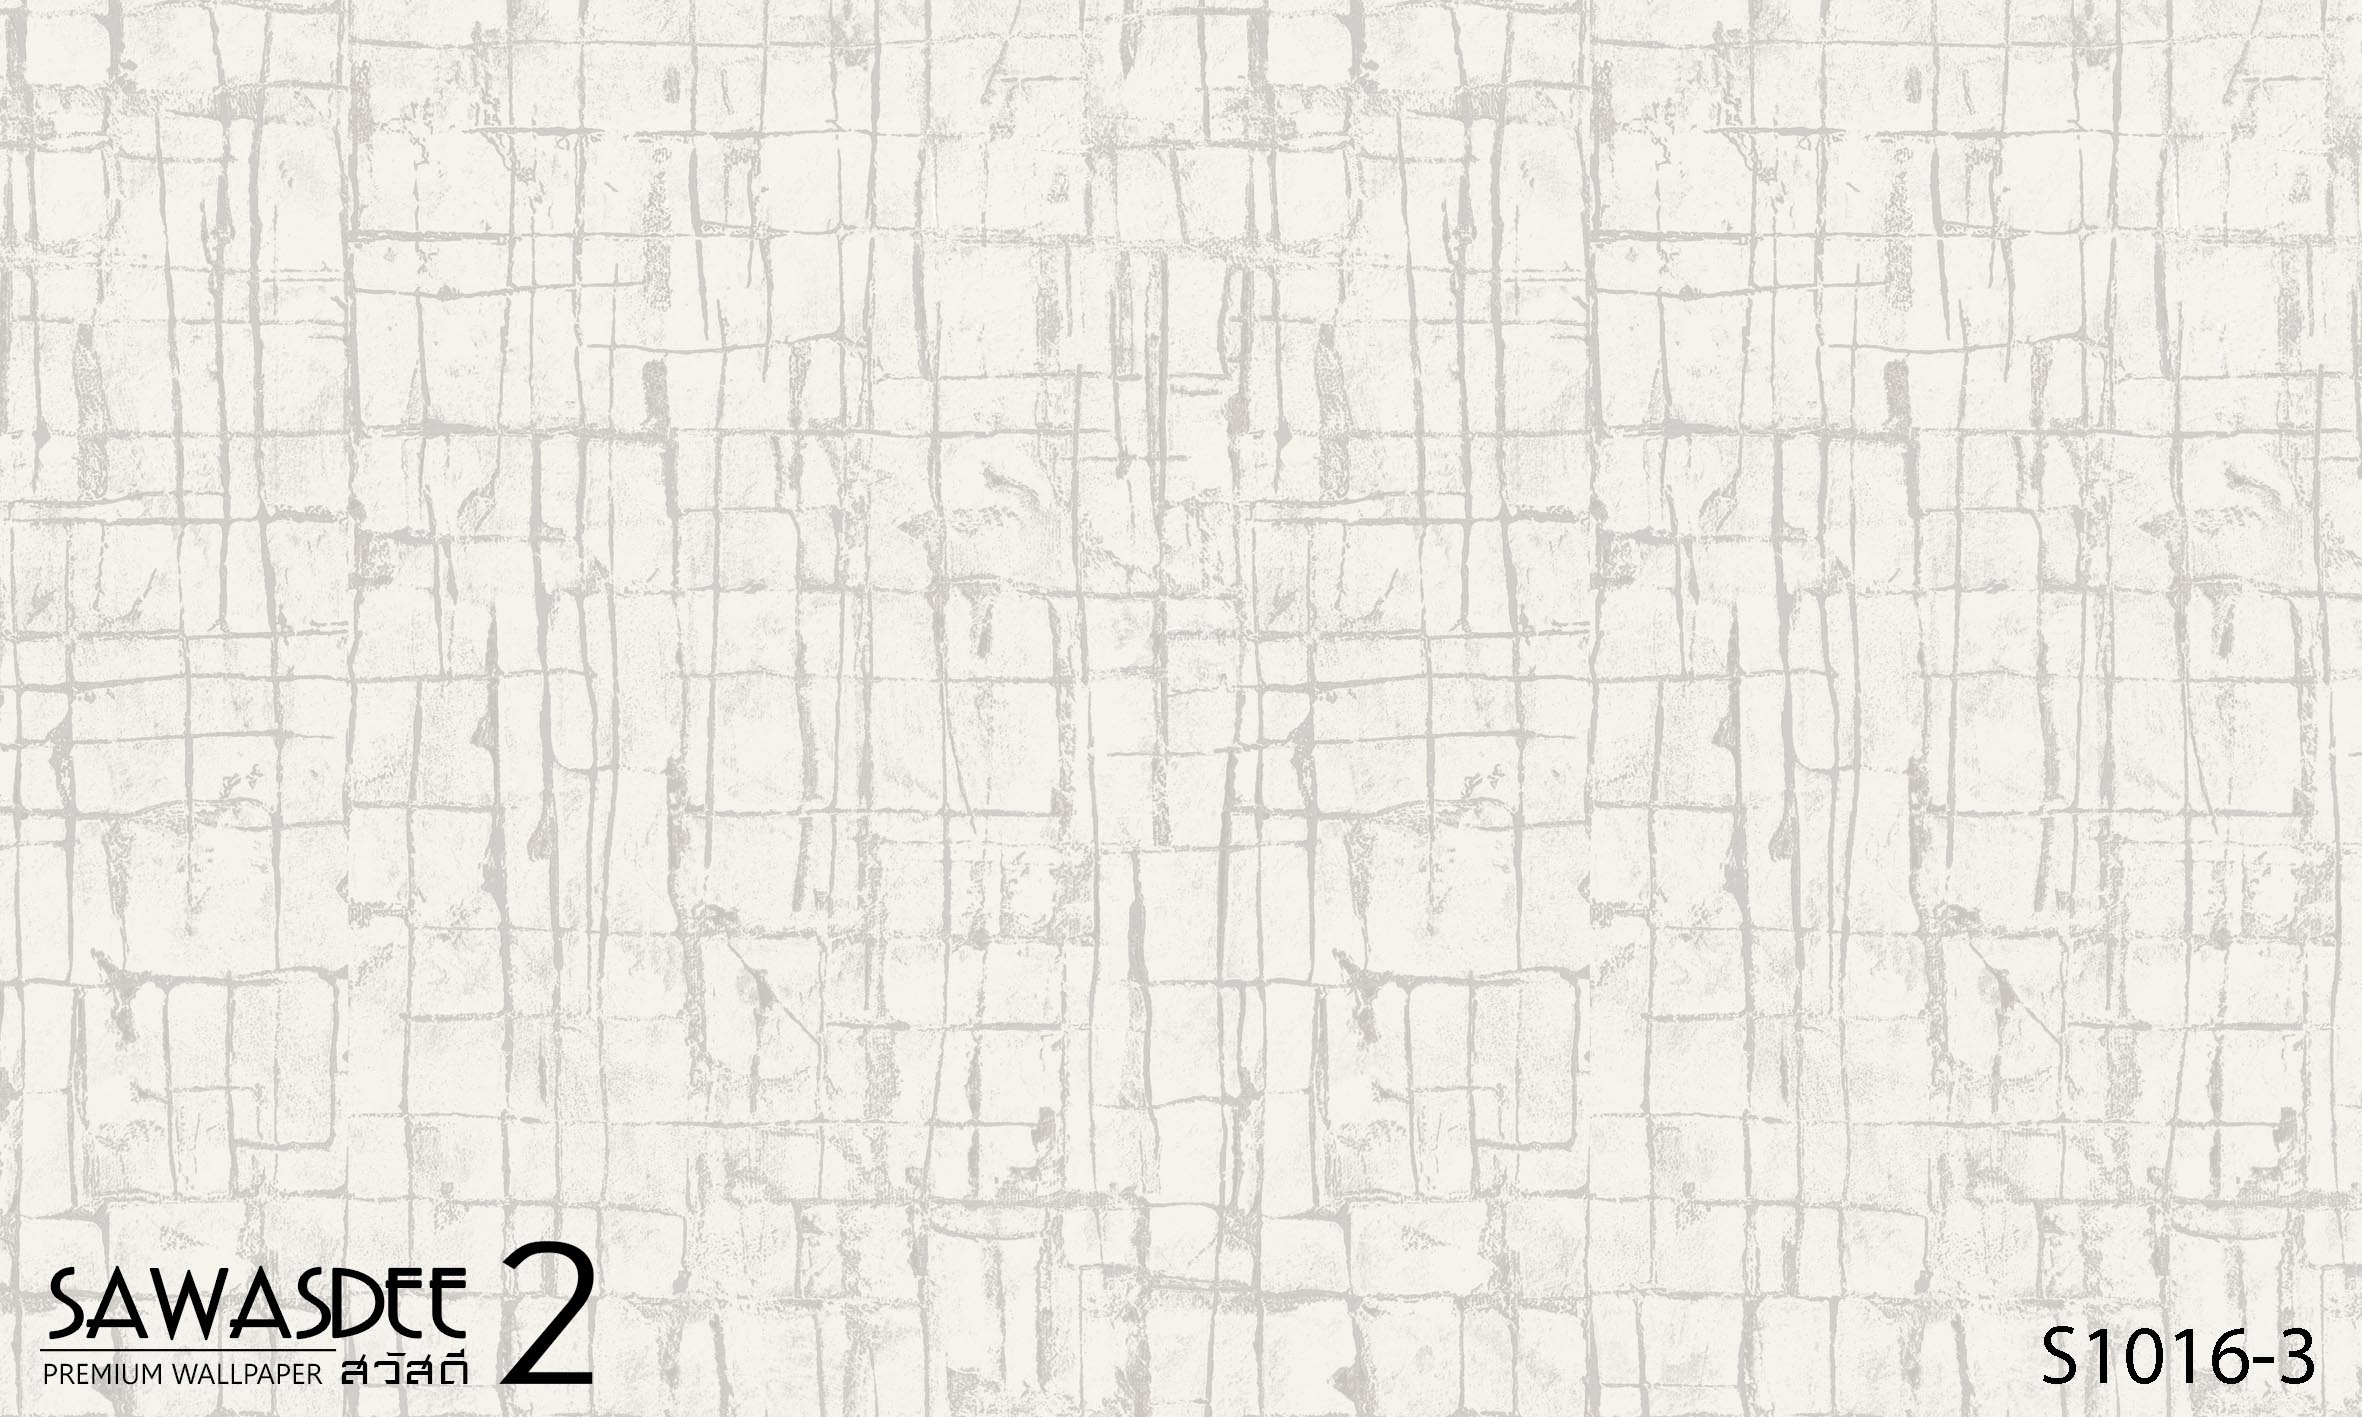 Wallpaper (SAWASDEE 2) S1016-3